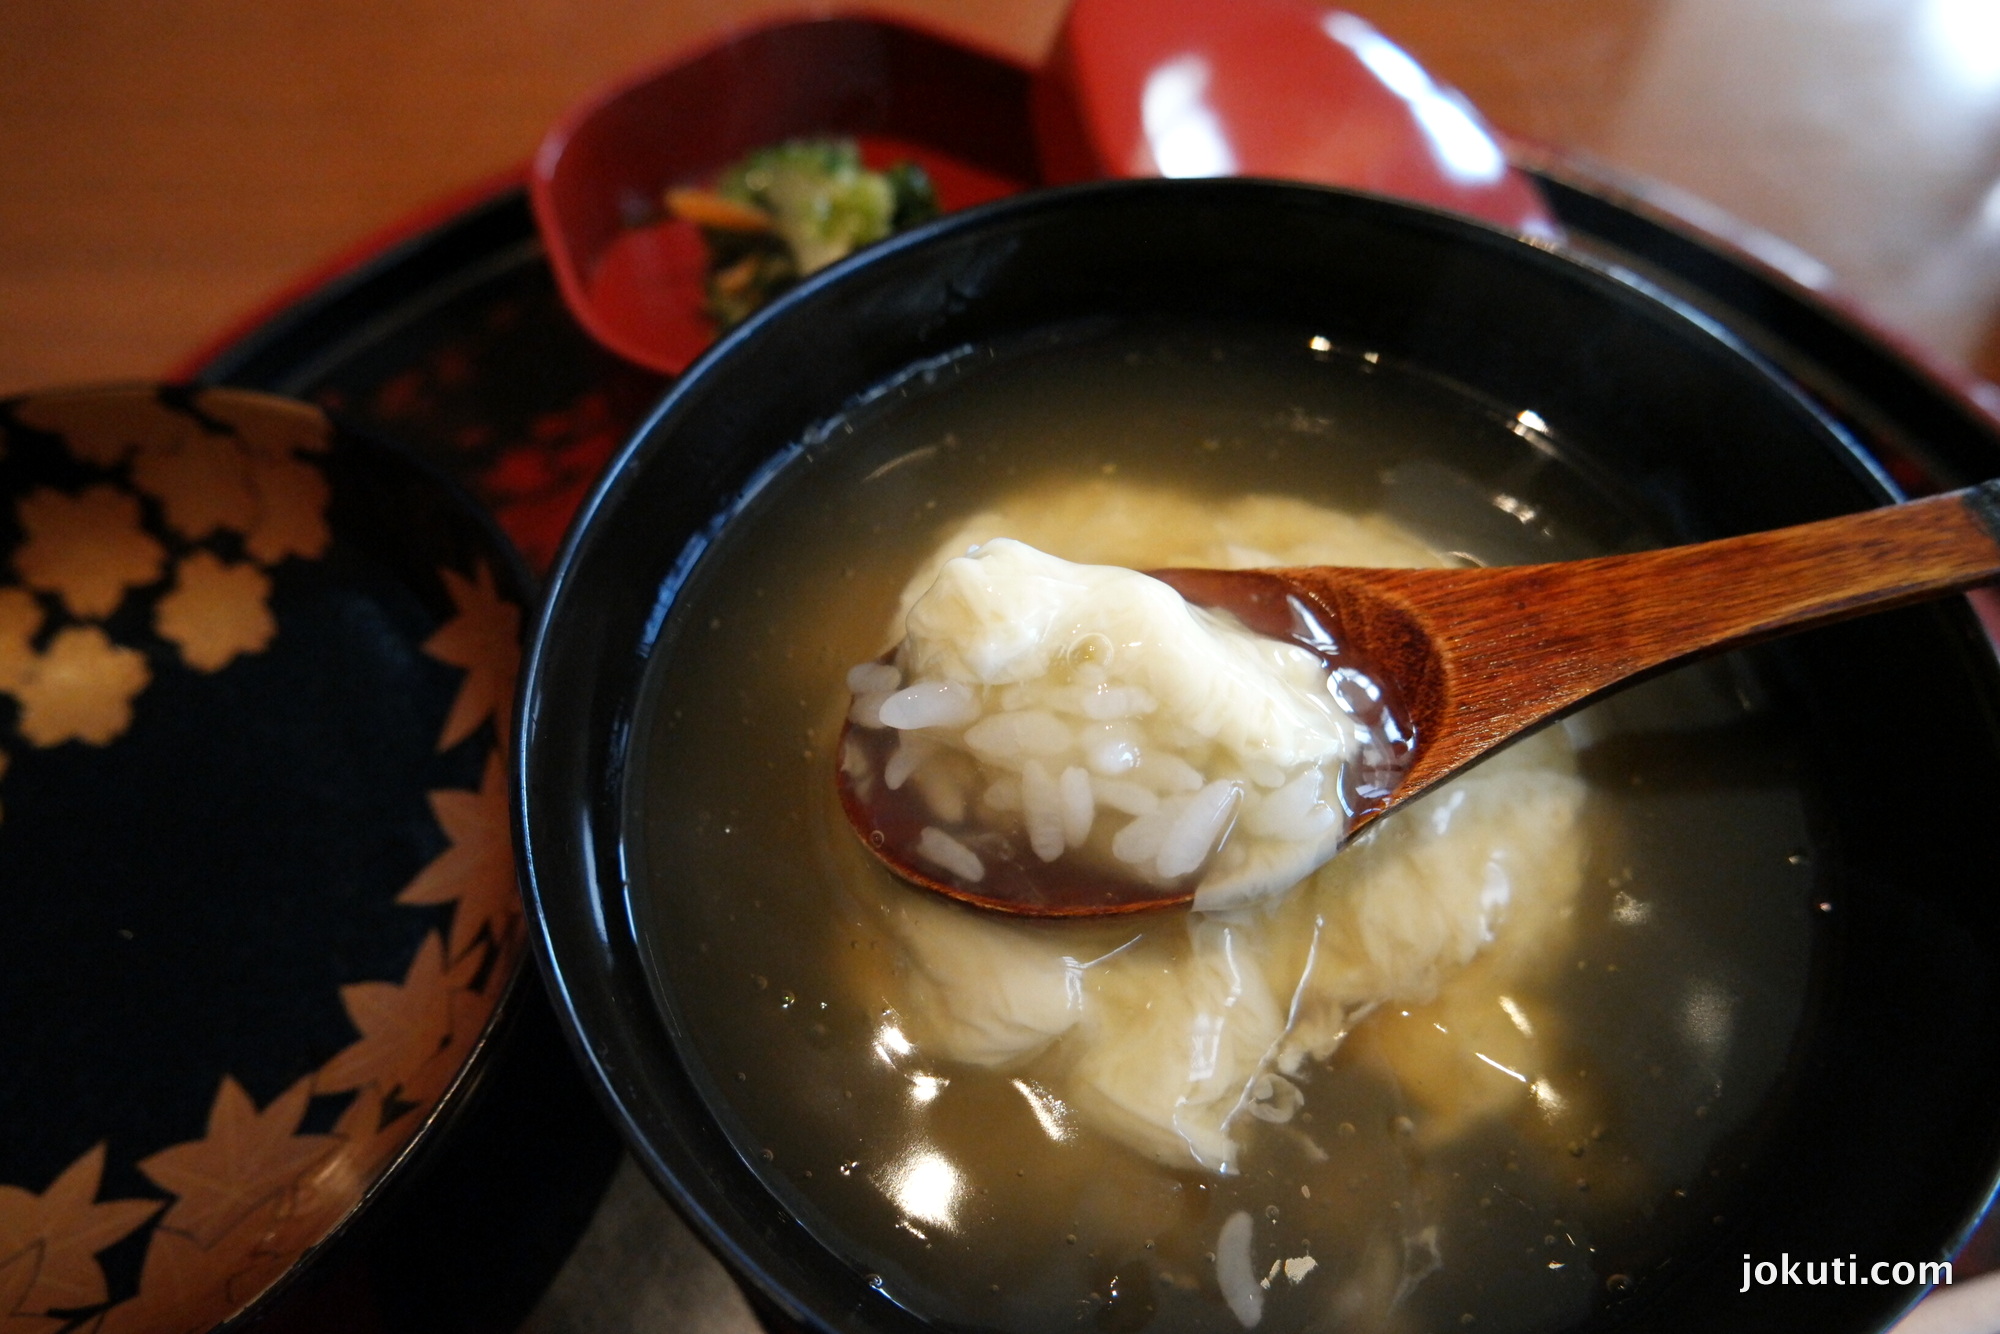 Steamed rice, tofu skin, hot broth, Japanese pickles